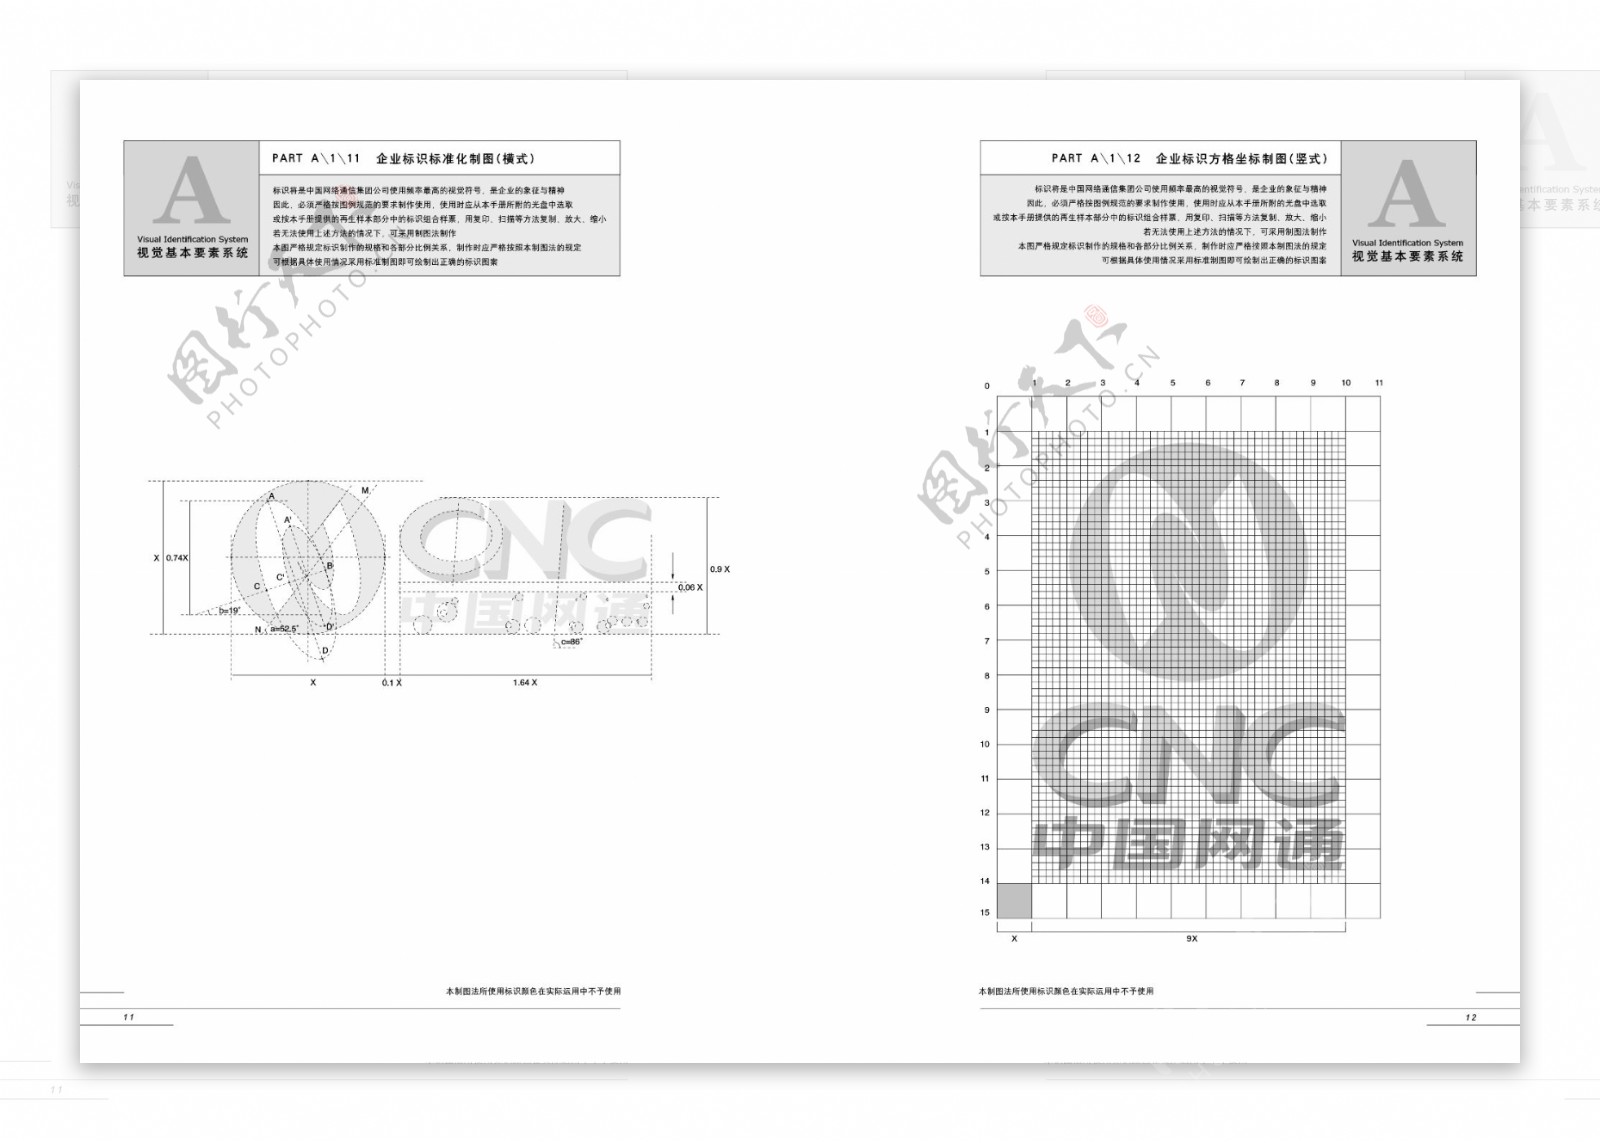 CNC中国网通全套完整VIS基础部分矢量CDR文件VI设计VI宝典